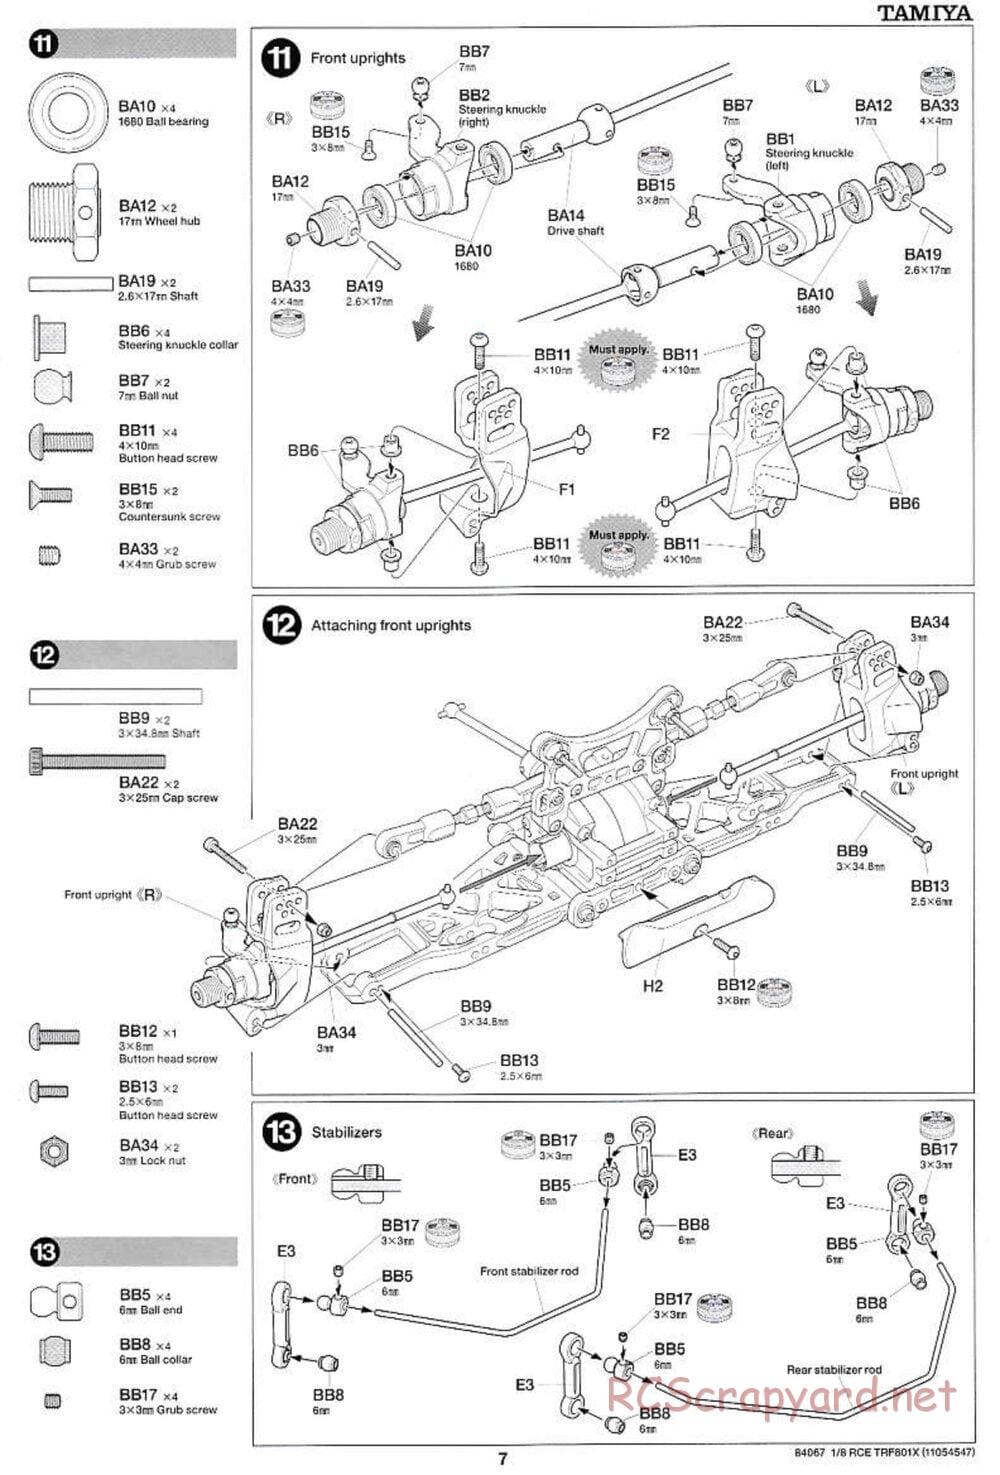 Tamiya - TRF801X Chassis - Manual - Page 7